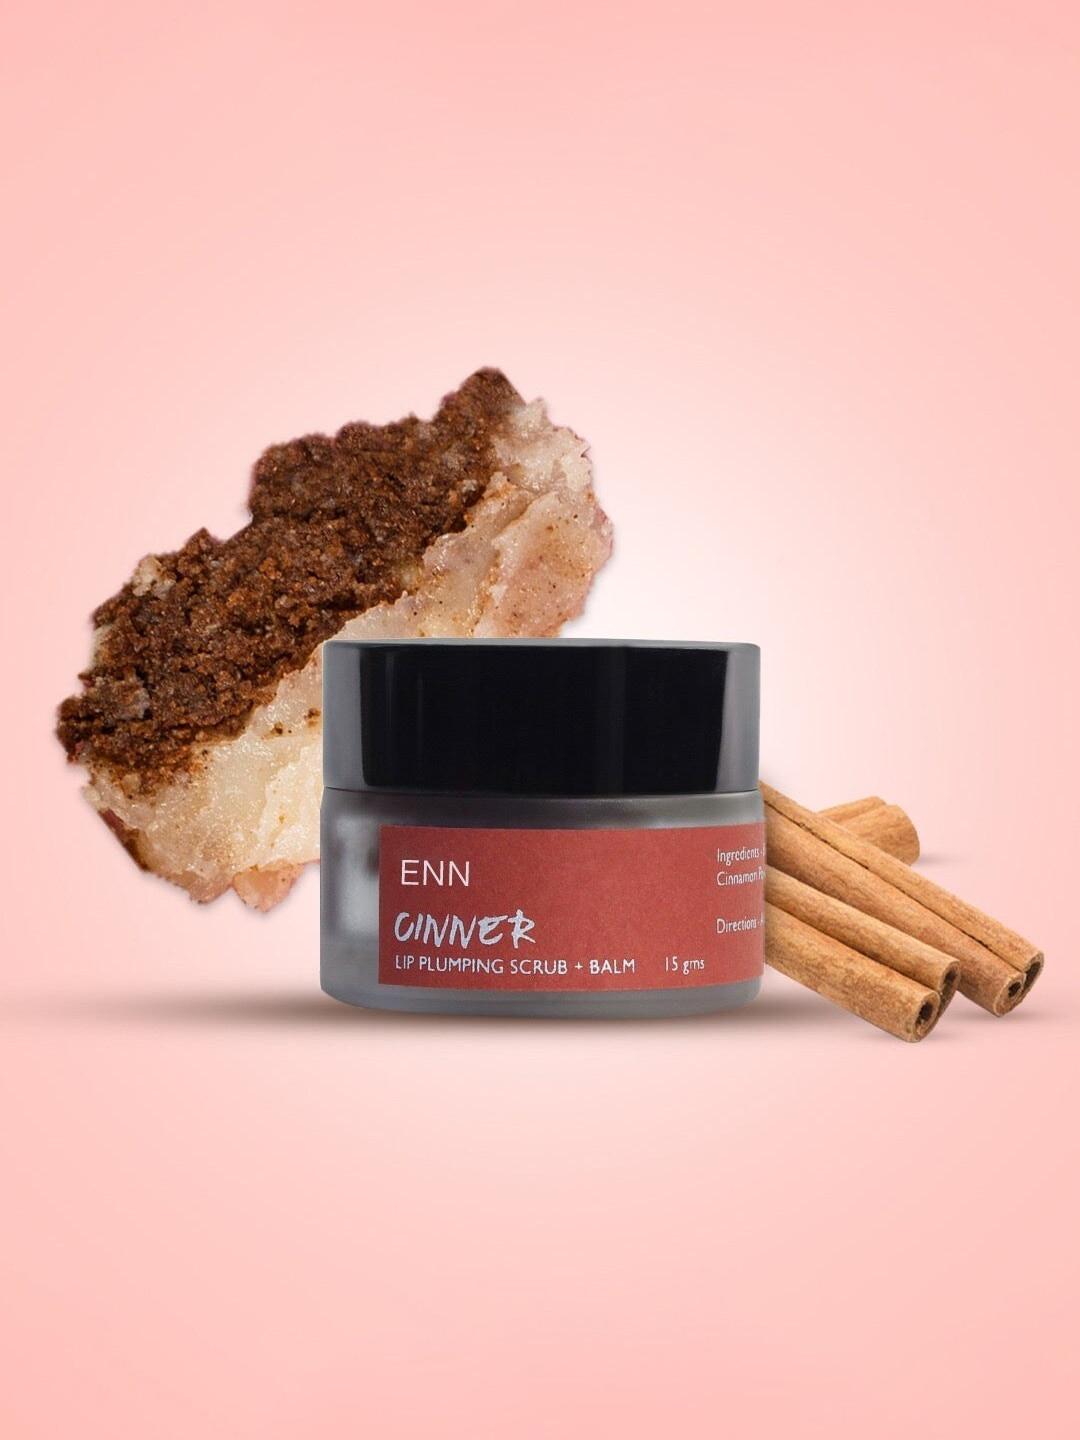 ENN Cinner Lip Plumping Scrub + Balm with Cocoa & Shea Butter - 15 g